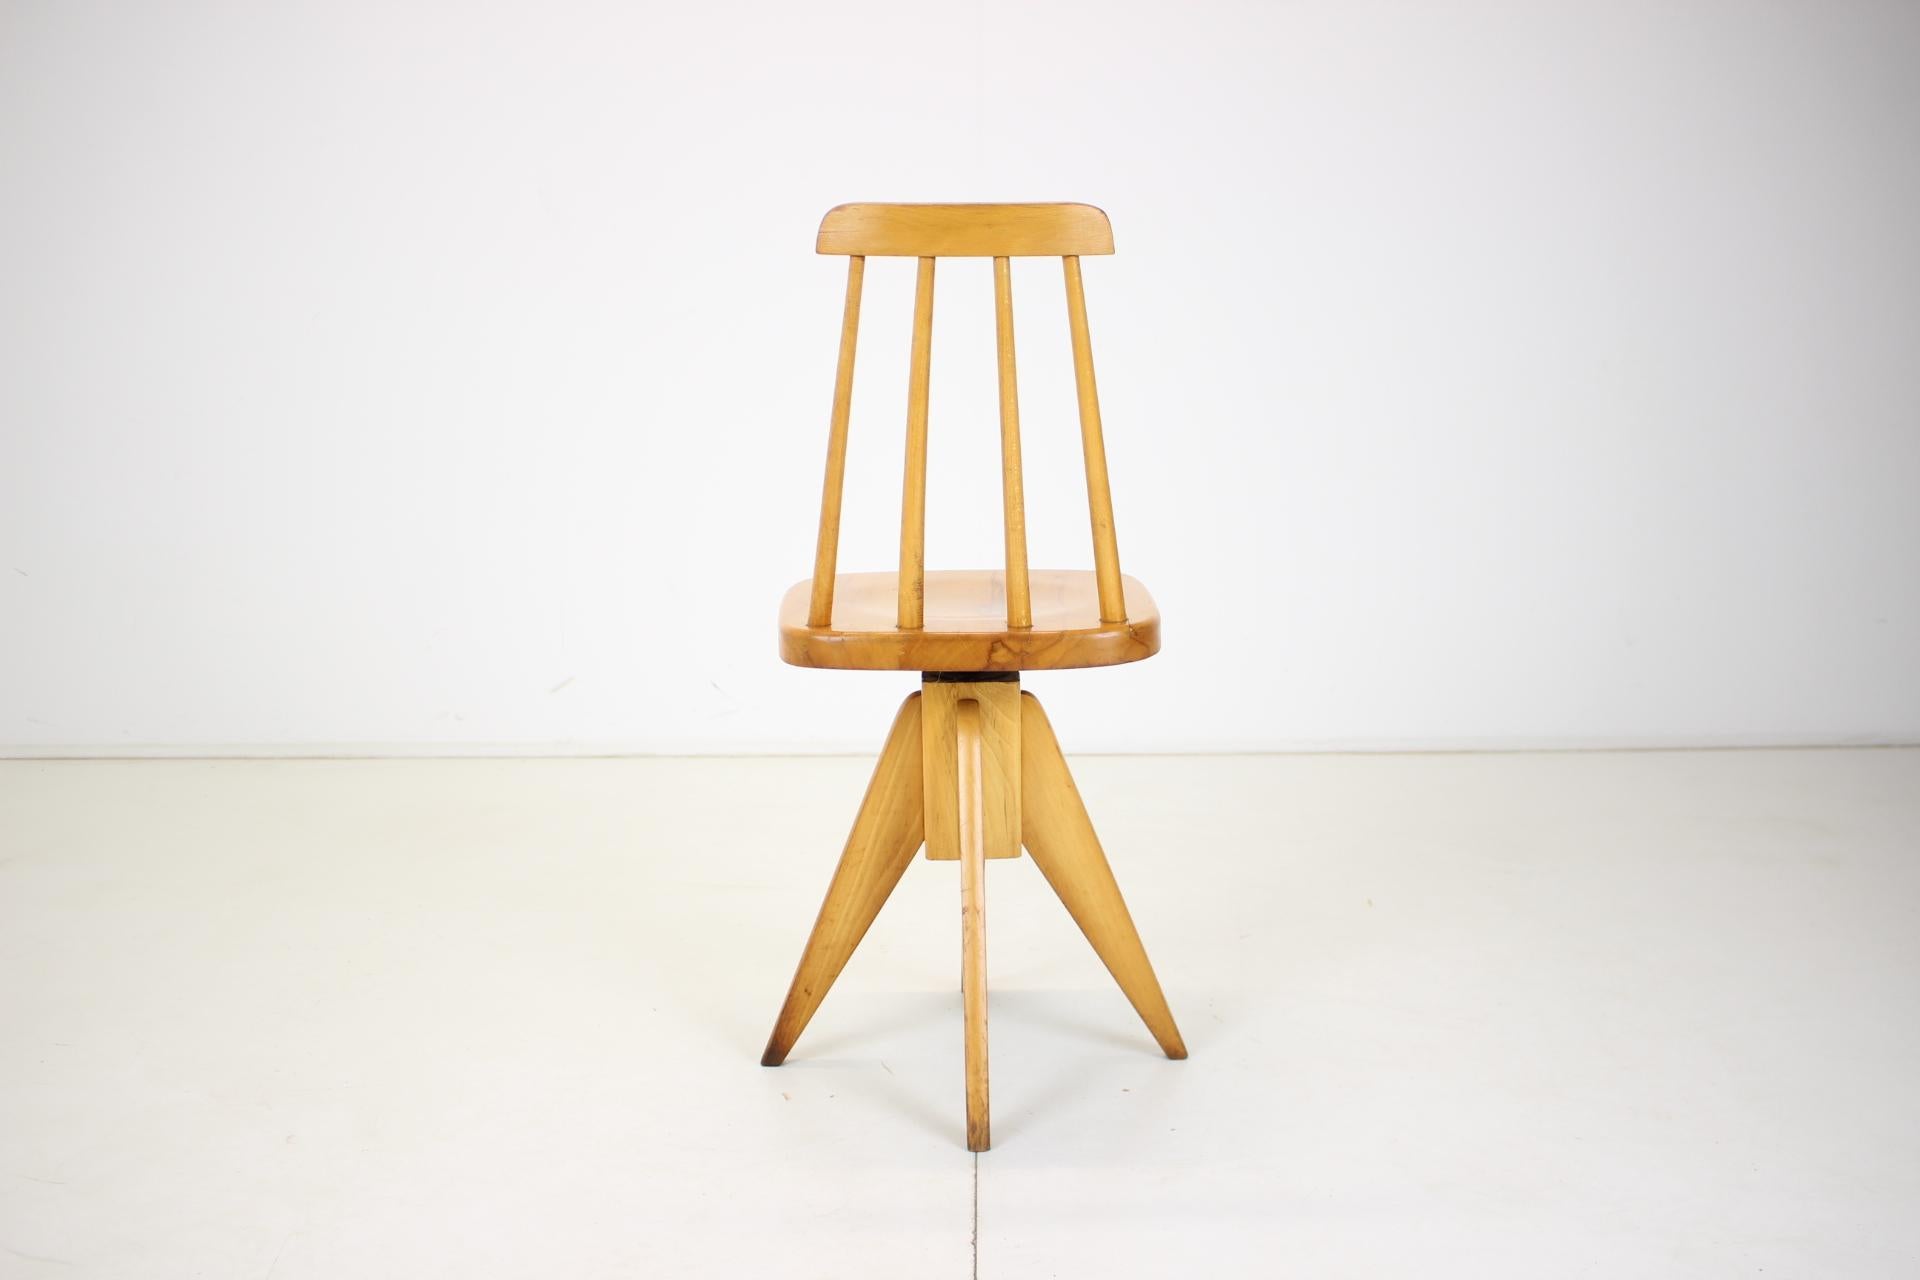 Midcentury Wood Revolving Chair, Czechoslovakia, 1970s For Sale 1